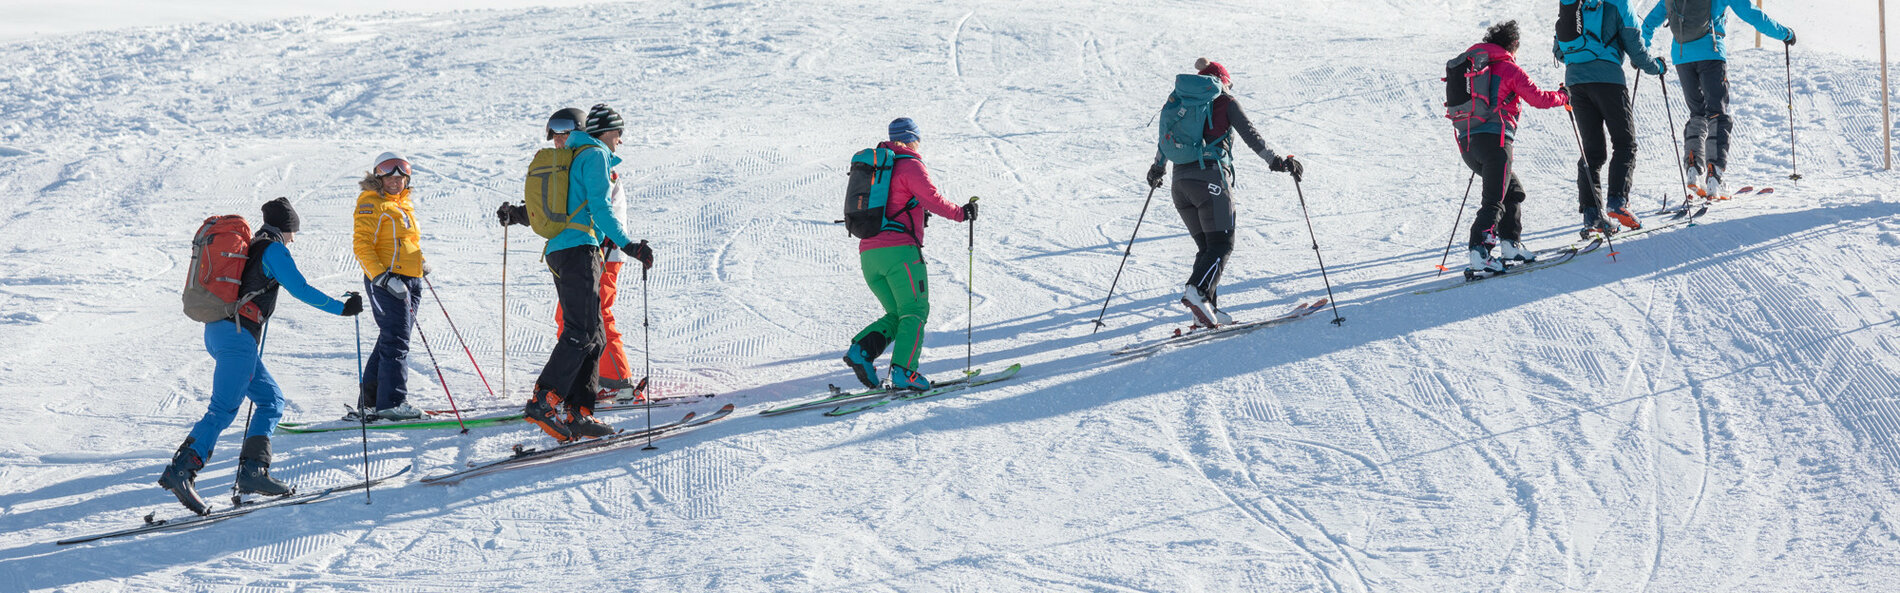 Group of ski tourers crossing the ski slope. 